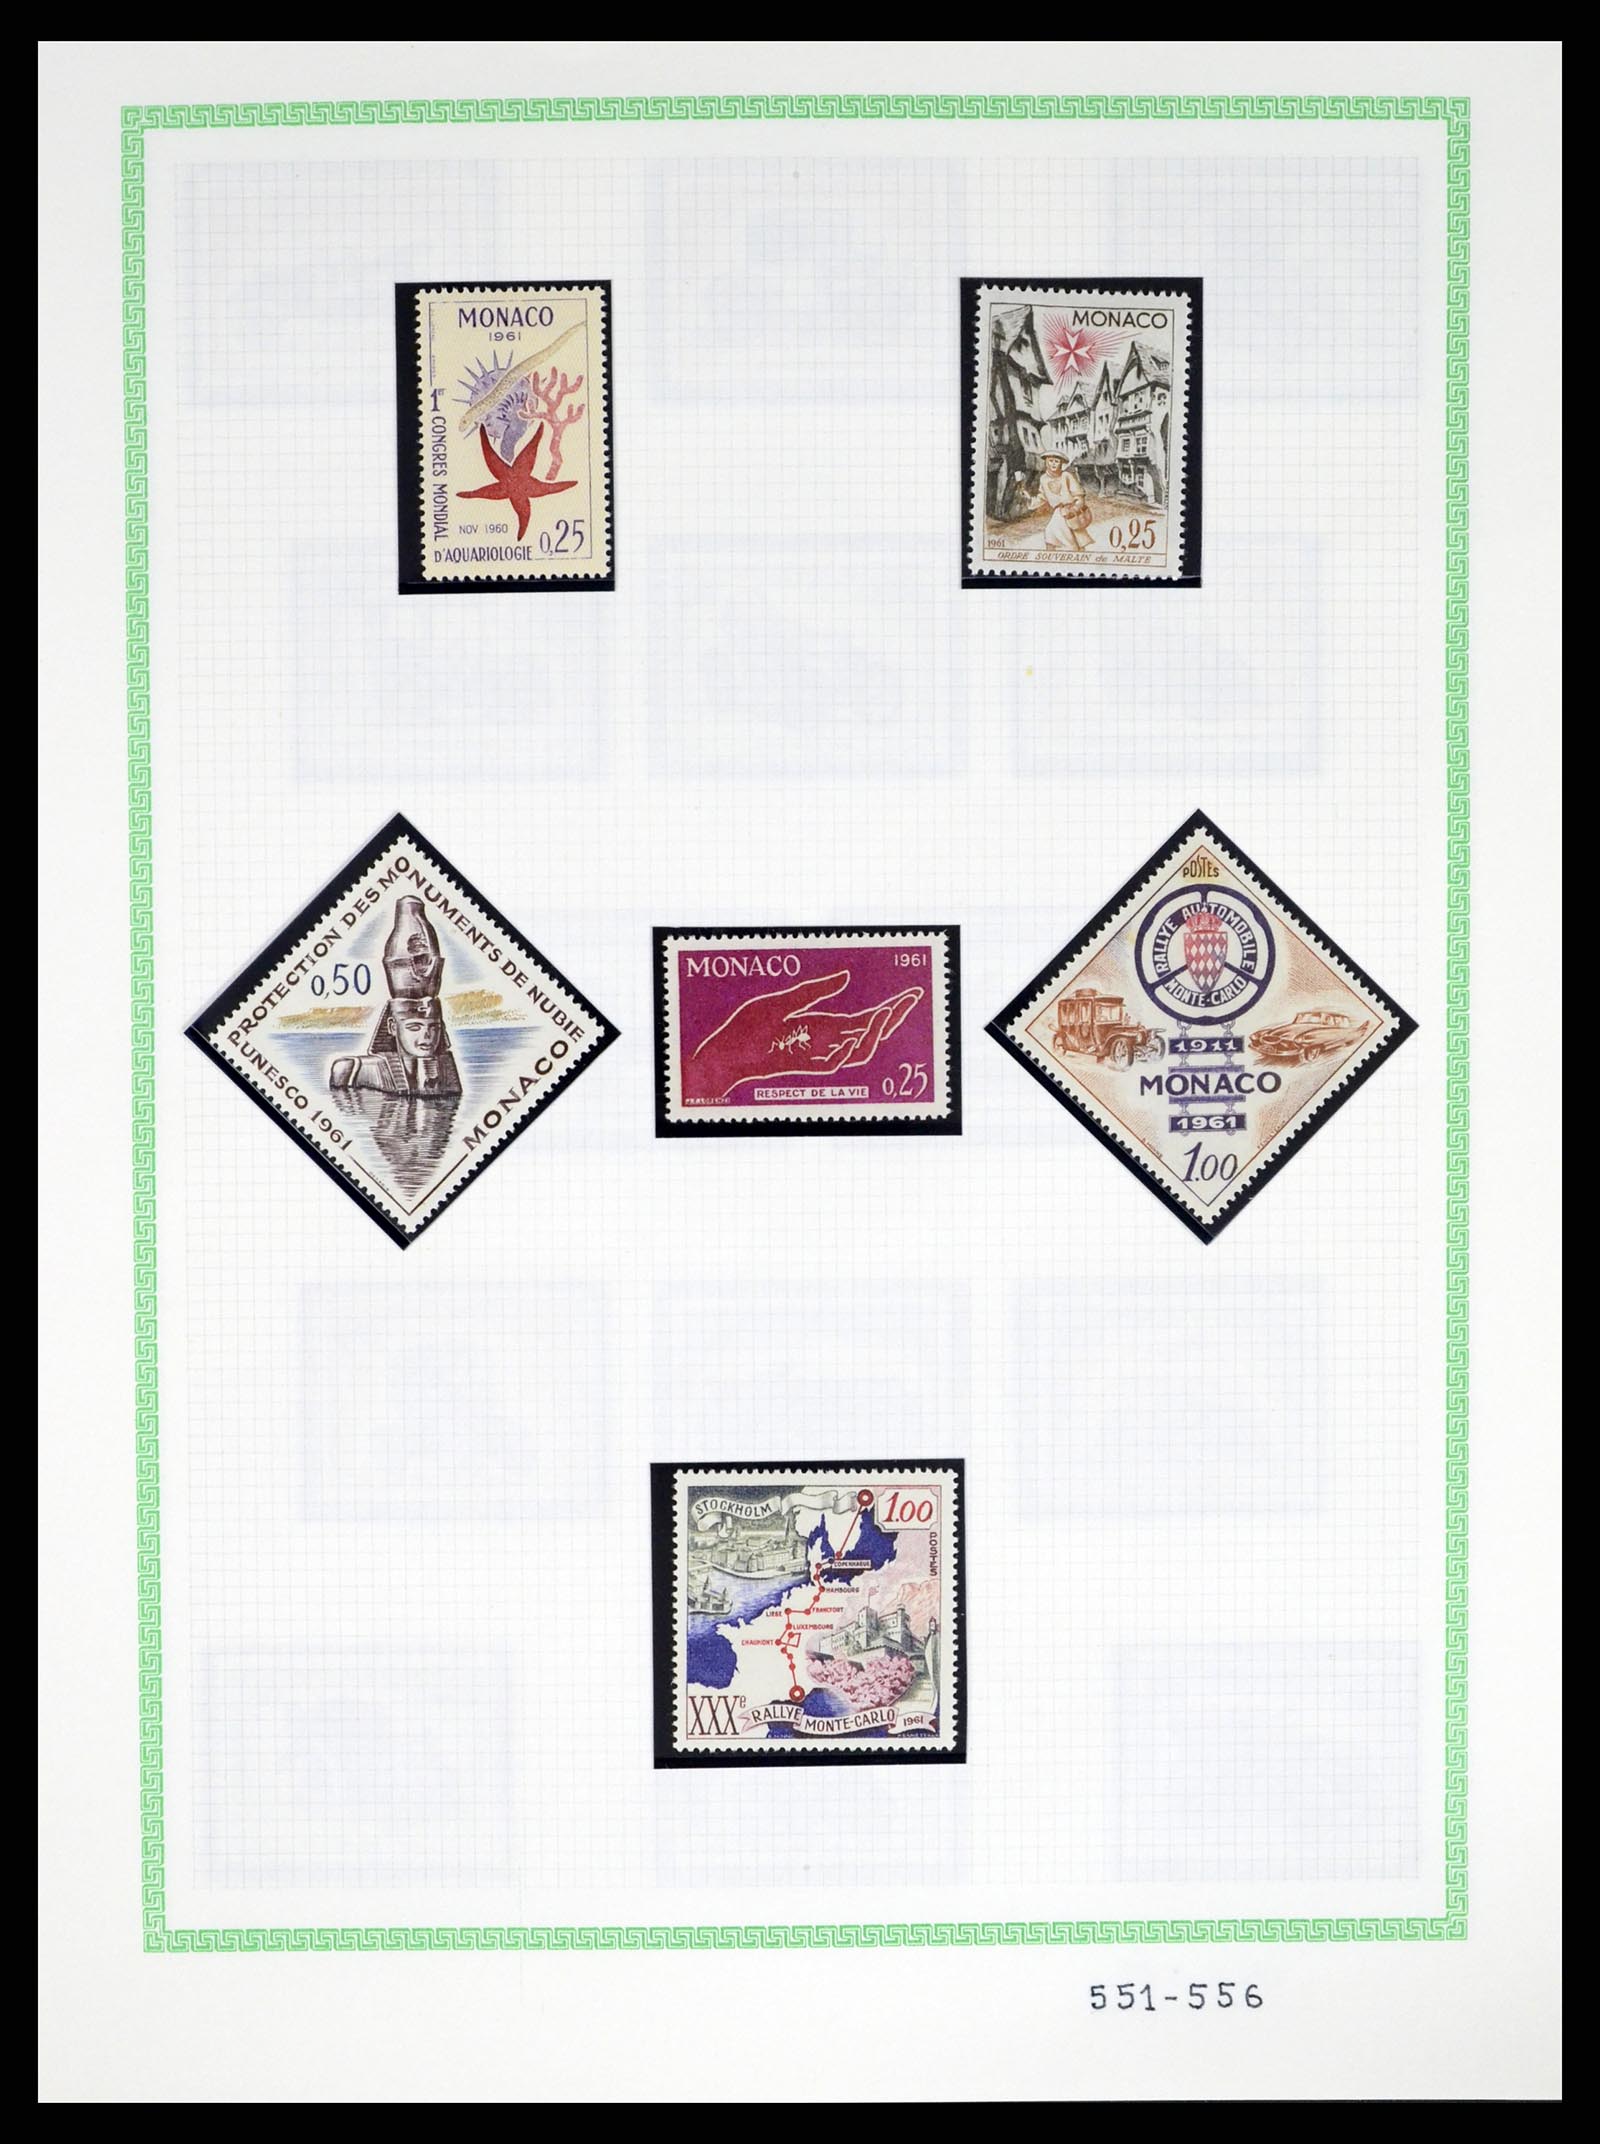 37380 050 - Stamp collection 37380 Monaco 1921-2015.